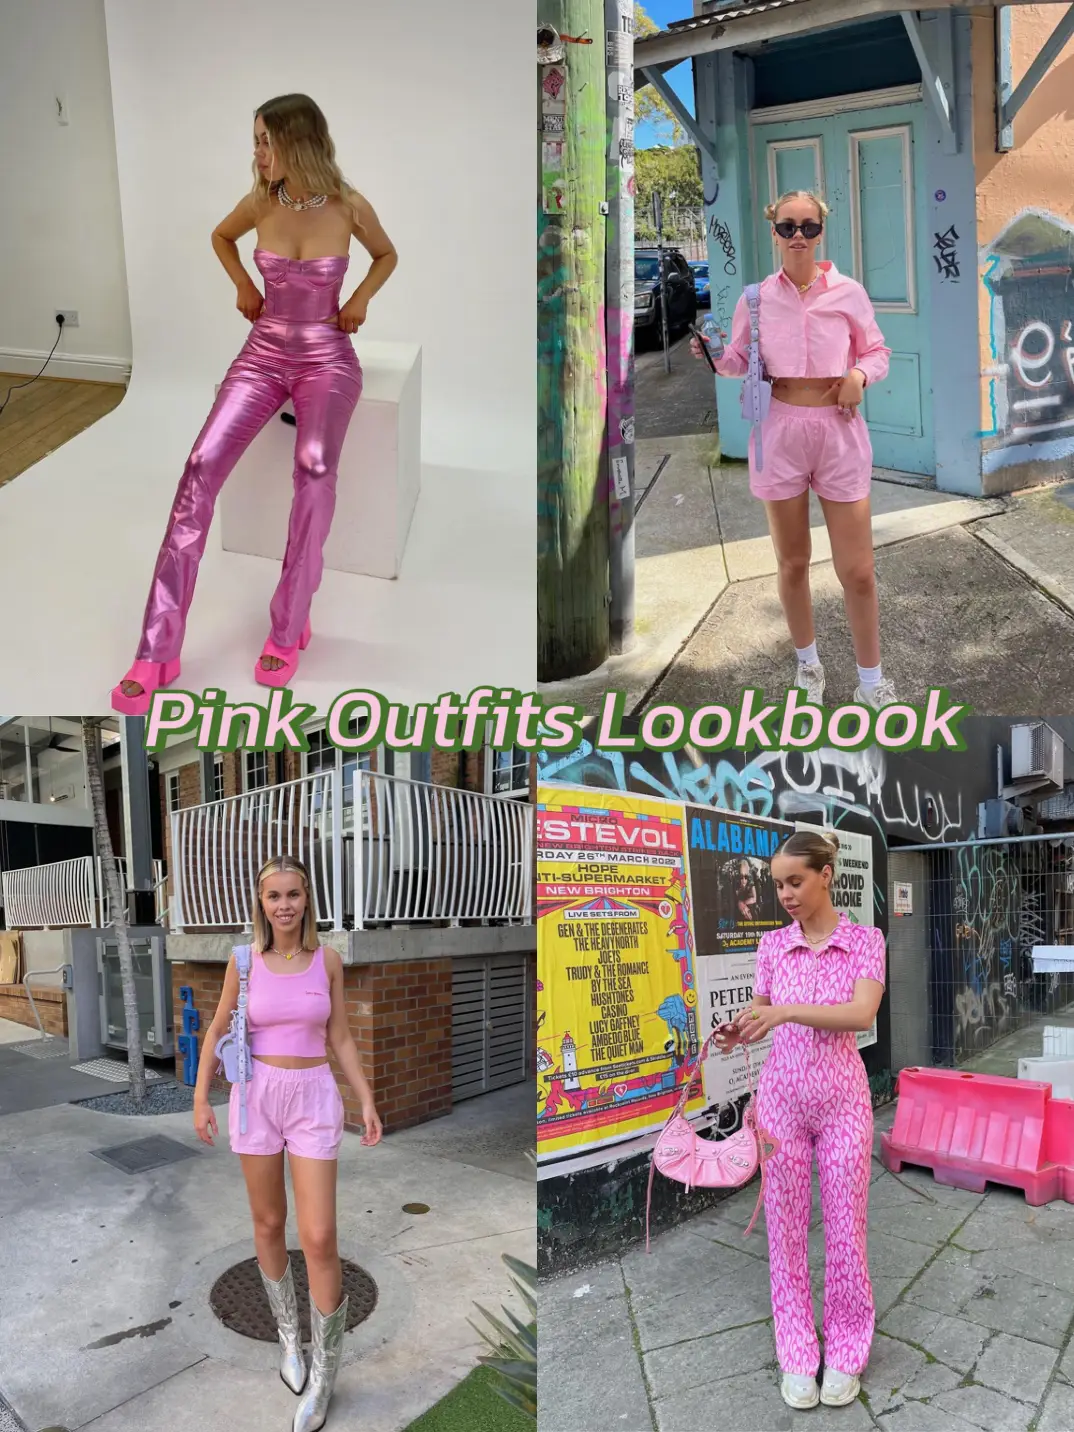 Lululemon Athletica Pink Active Pants Size 20 (Plus) - 52% off